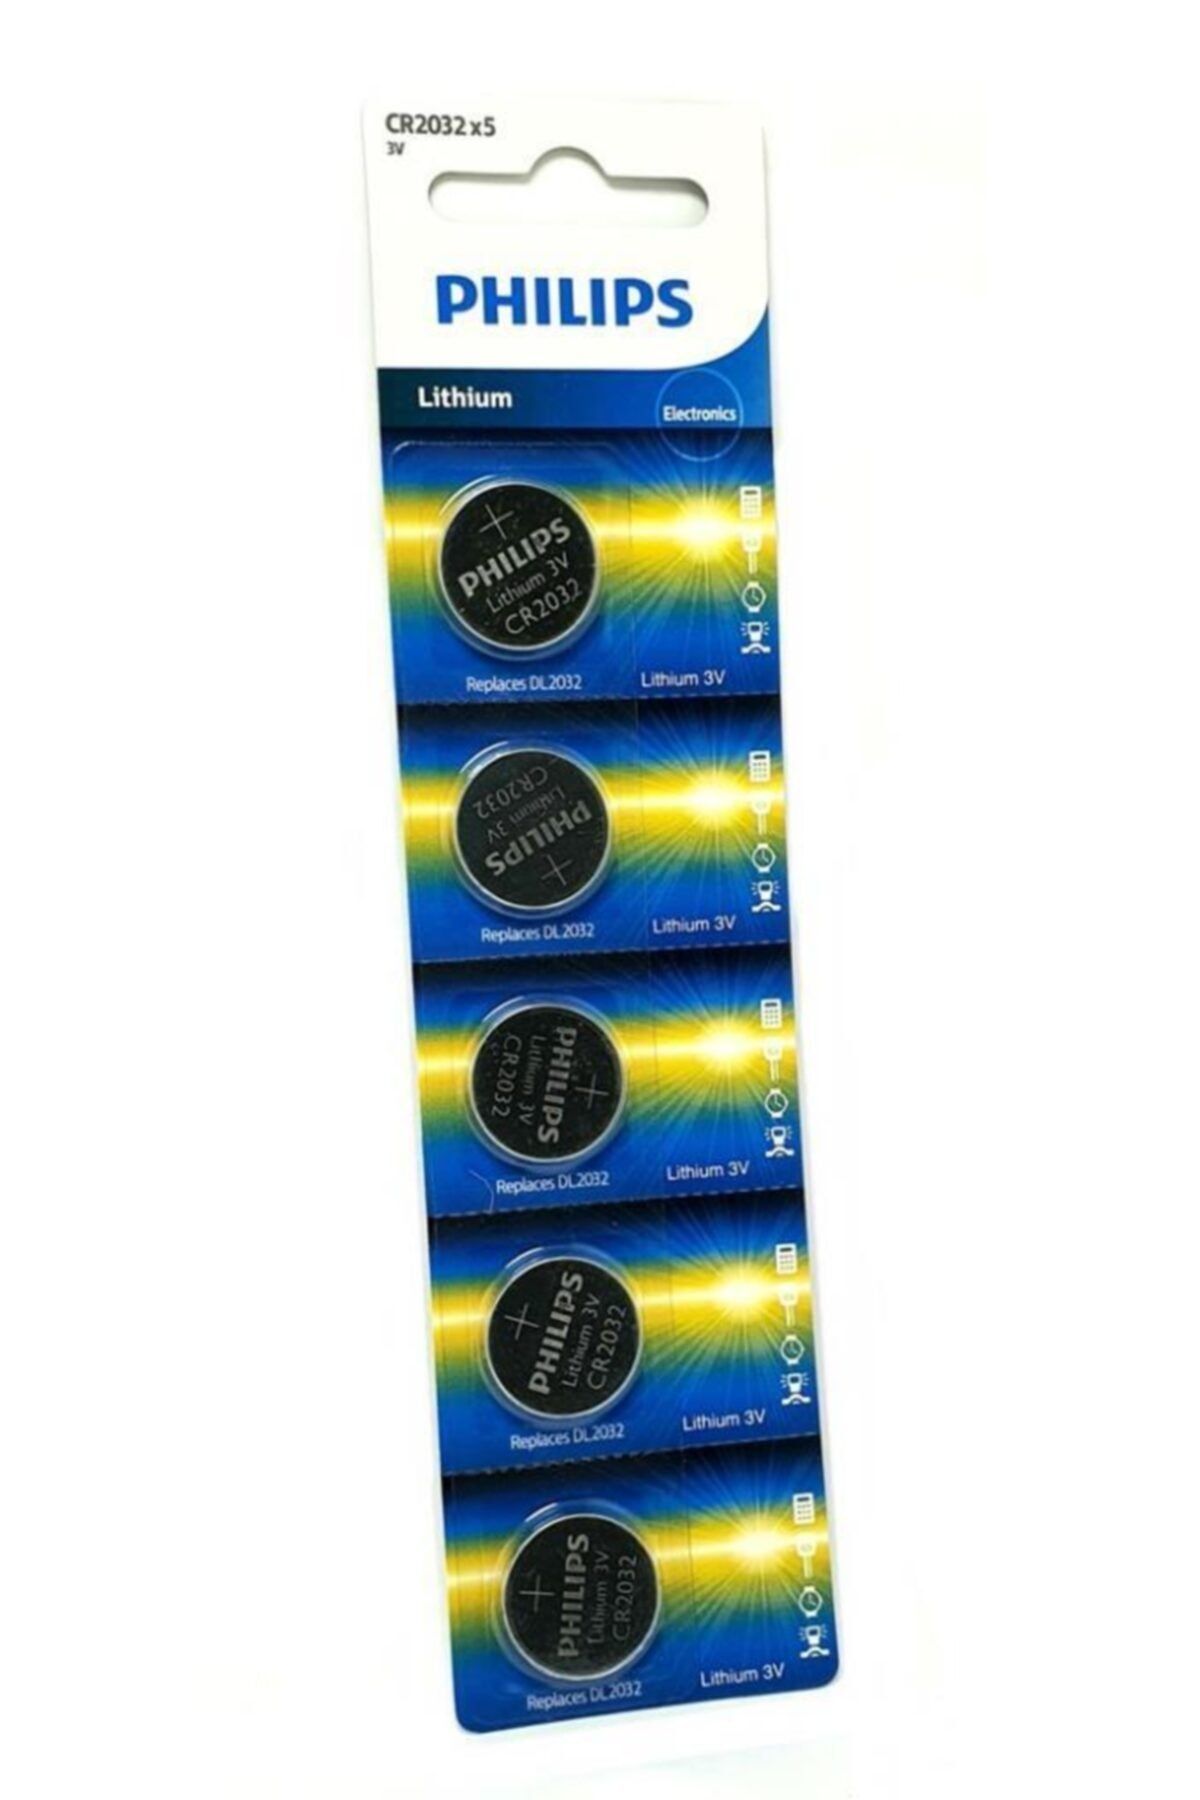 Philips Phılıps Cr2032 3volt Lithium Pil 5adet - Kargo Ücretsiz